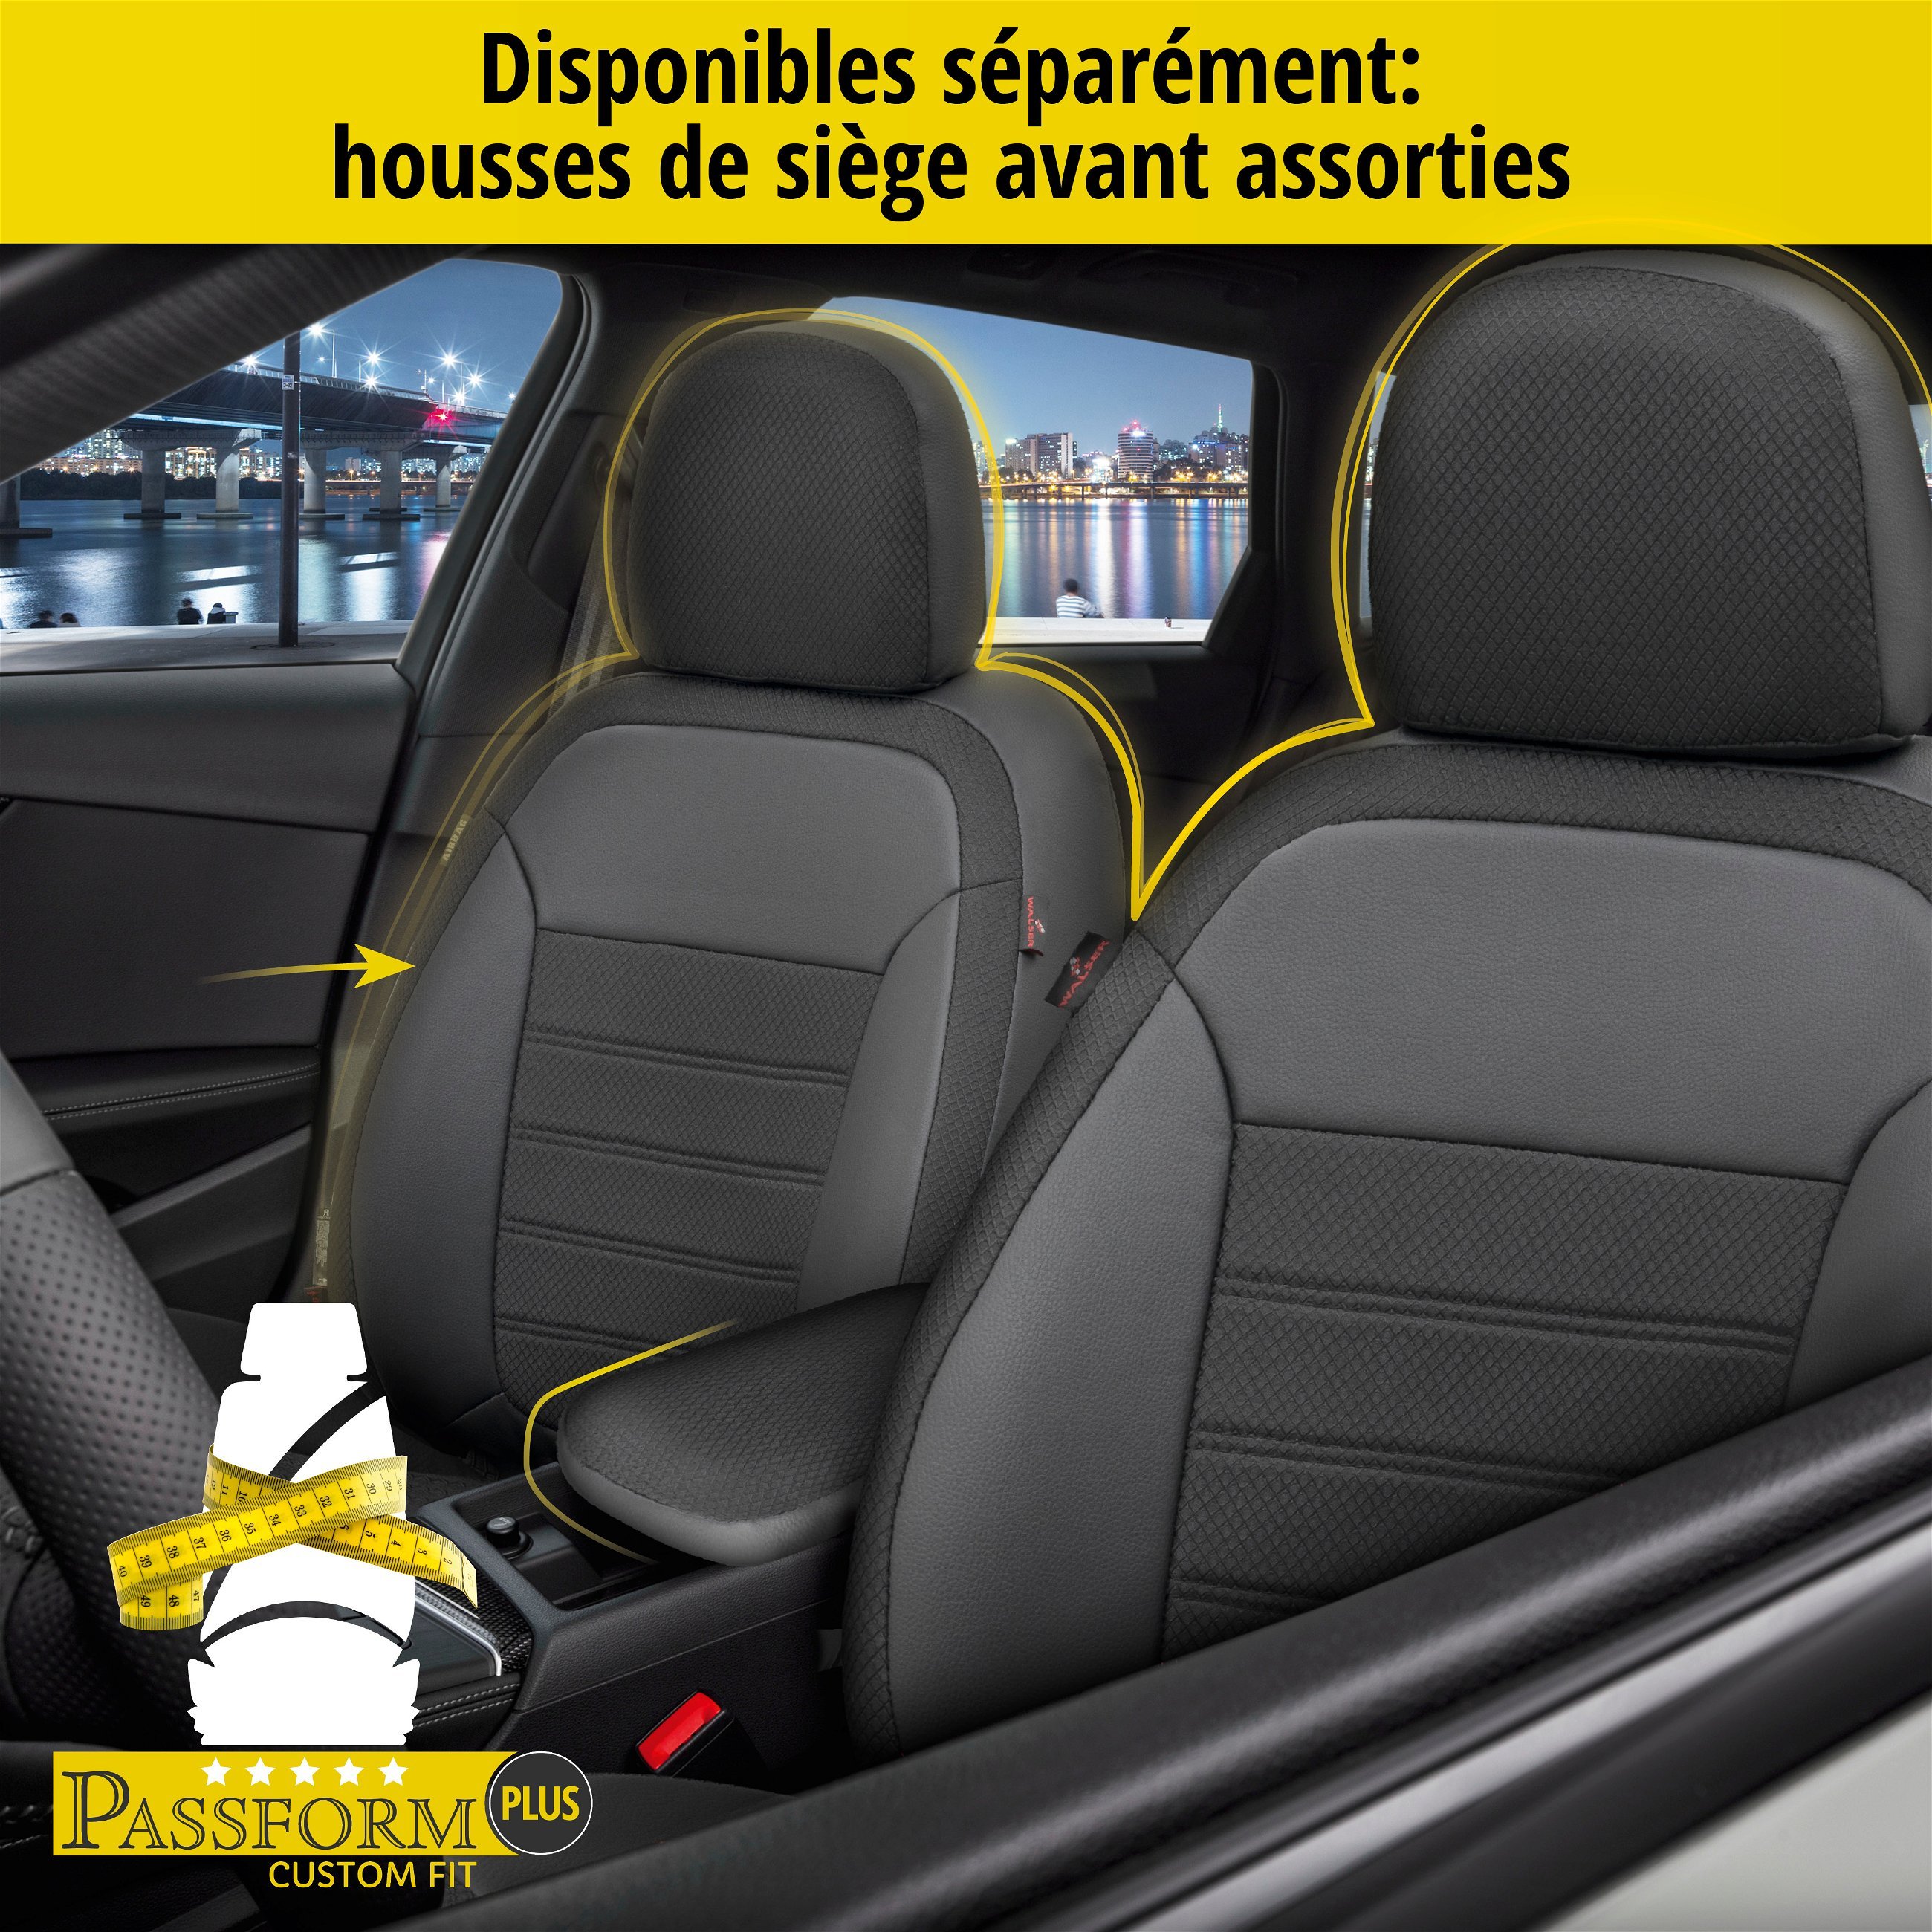 Housse de siège Aversa pour Opel Astra J Caravan (P10) 10/2010-10/2015, 1 housse de siège arrière pour les sièges normaux